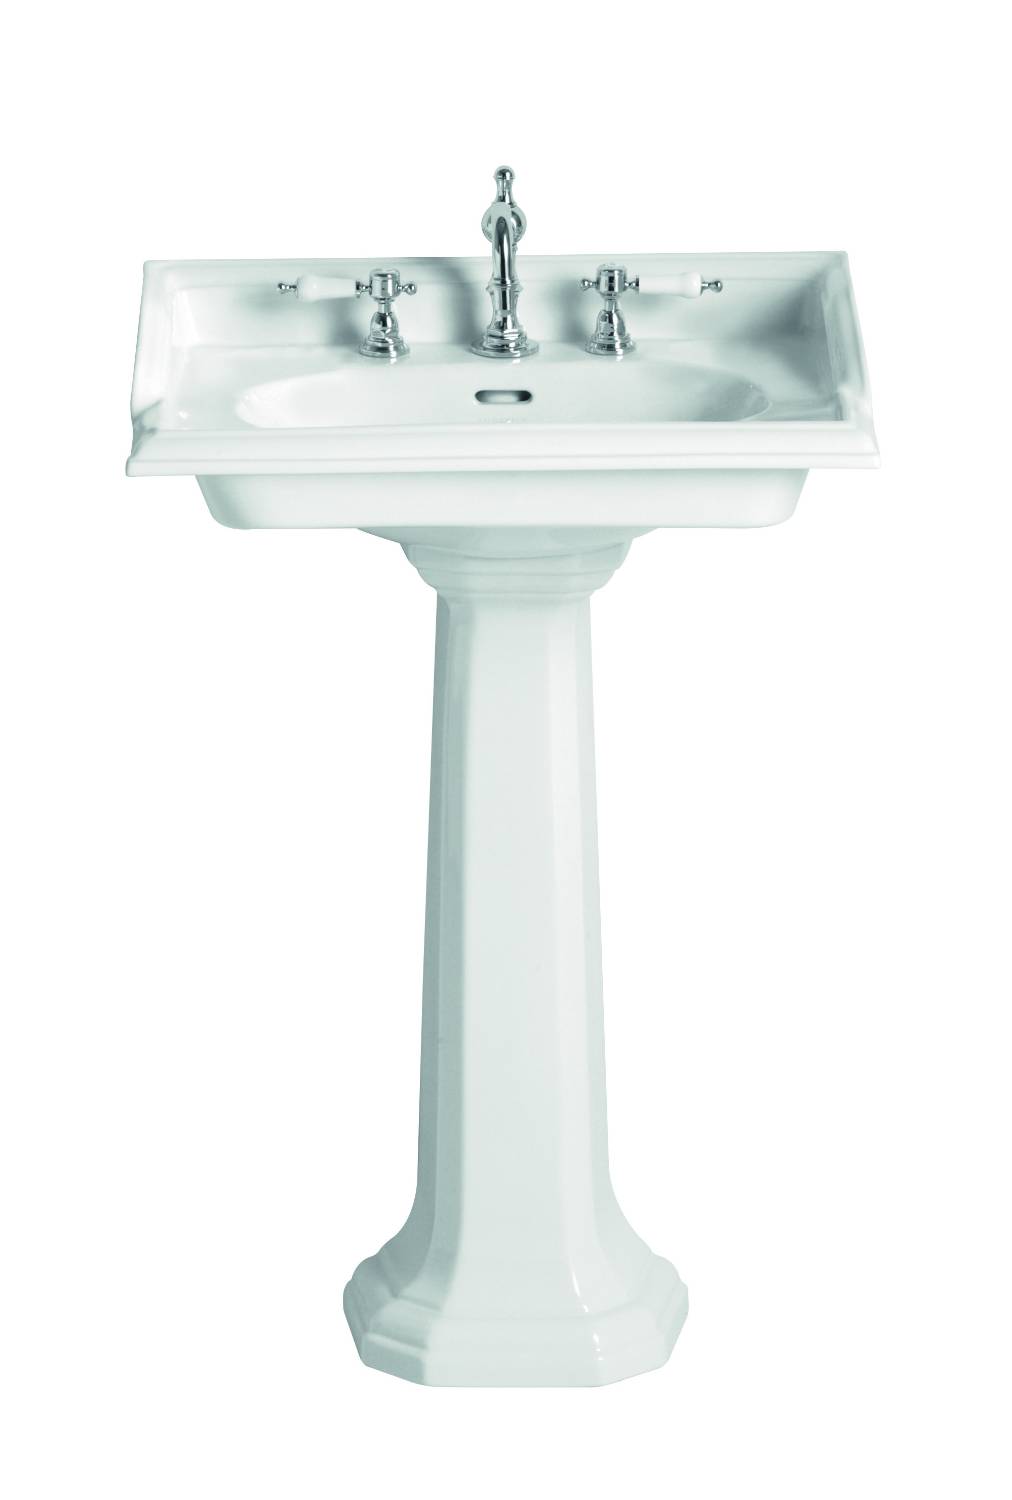 PVEW09 - Pedestal Wash Basin